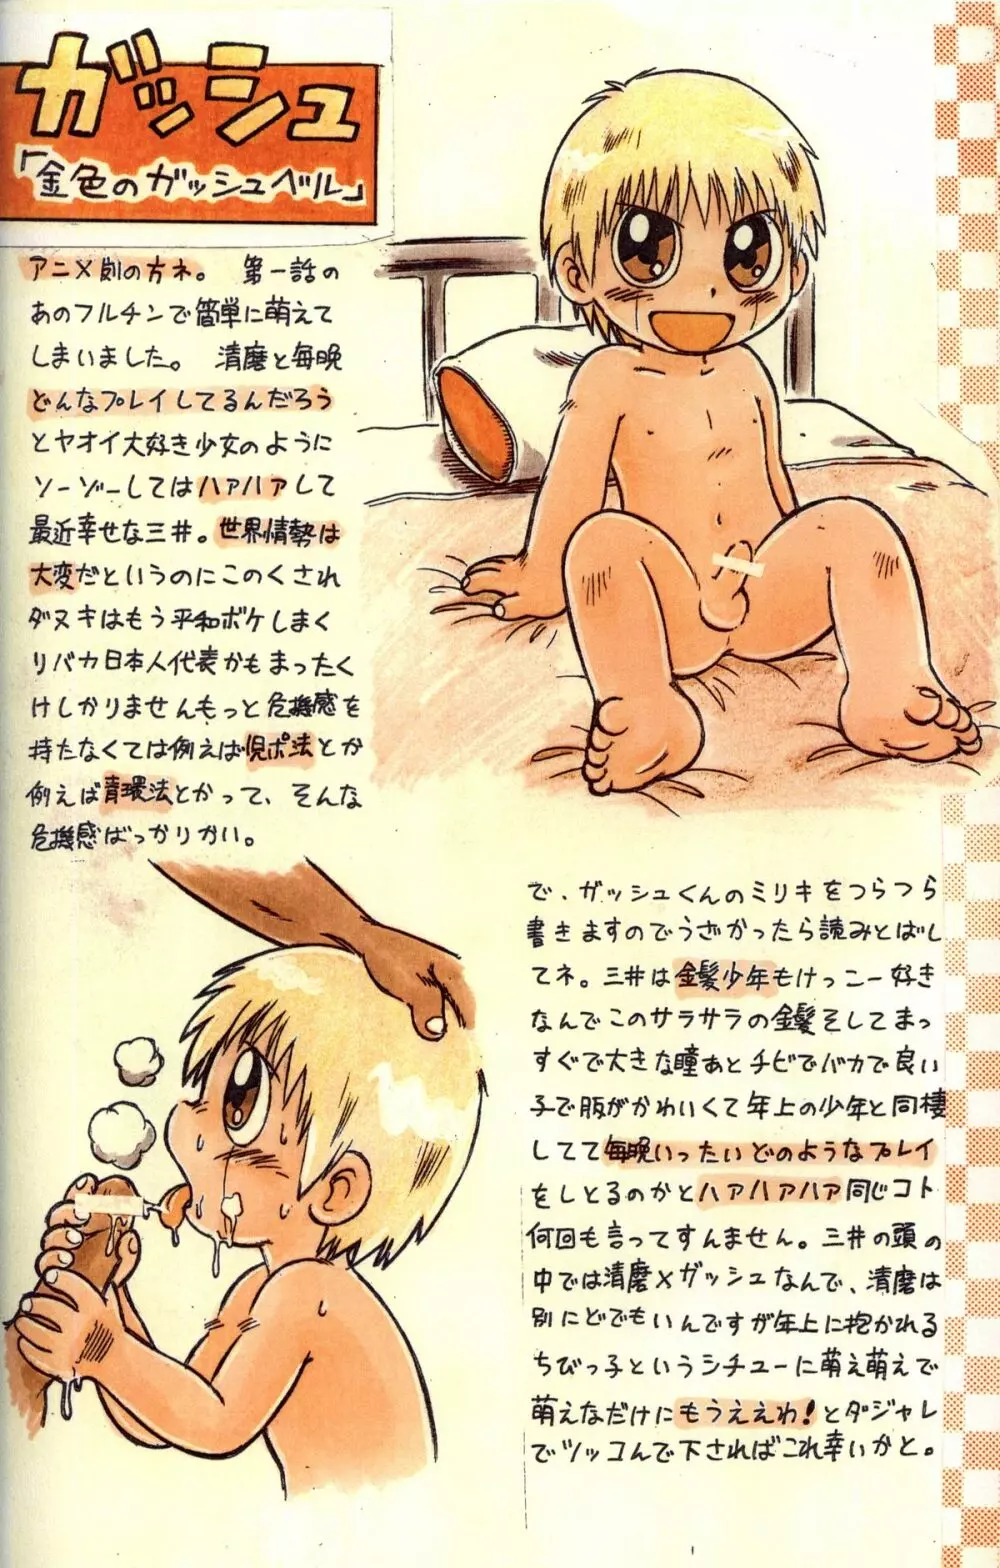 Mitsui Jun - Dreamer's Only 4 - page10